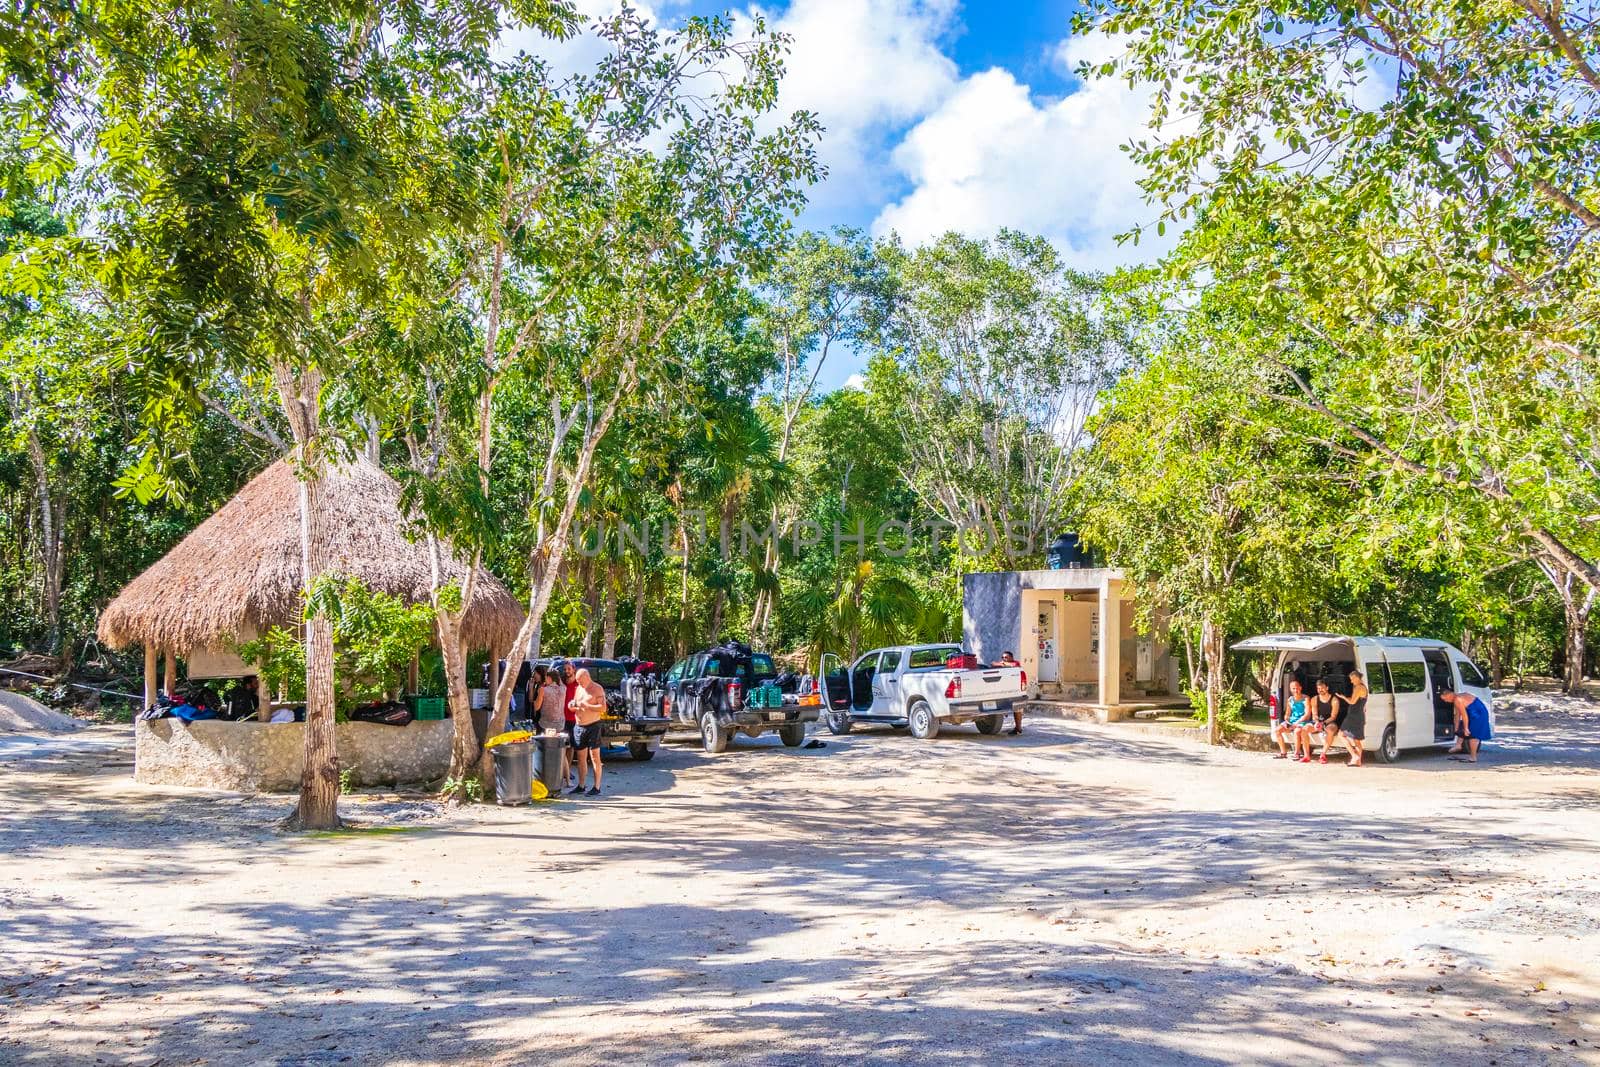 Quintana Roo Mexico 04. February 2022 Parking lot at the amazing blue turquoise water and limestone cave sinkhole cenote Tajma ha Tajmaha in Puerto Aventuras Quintana Roo Mexico.